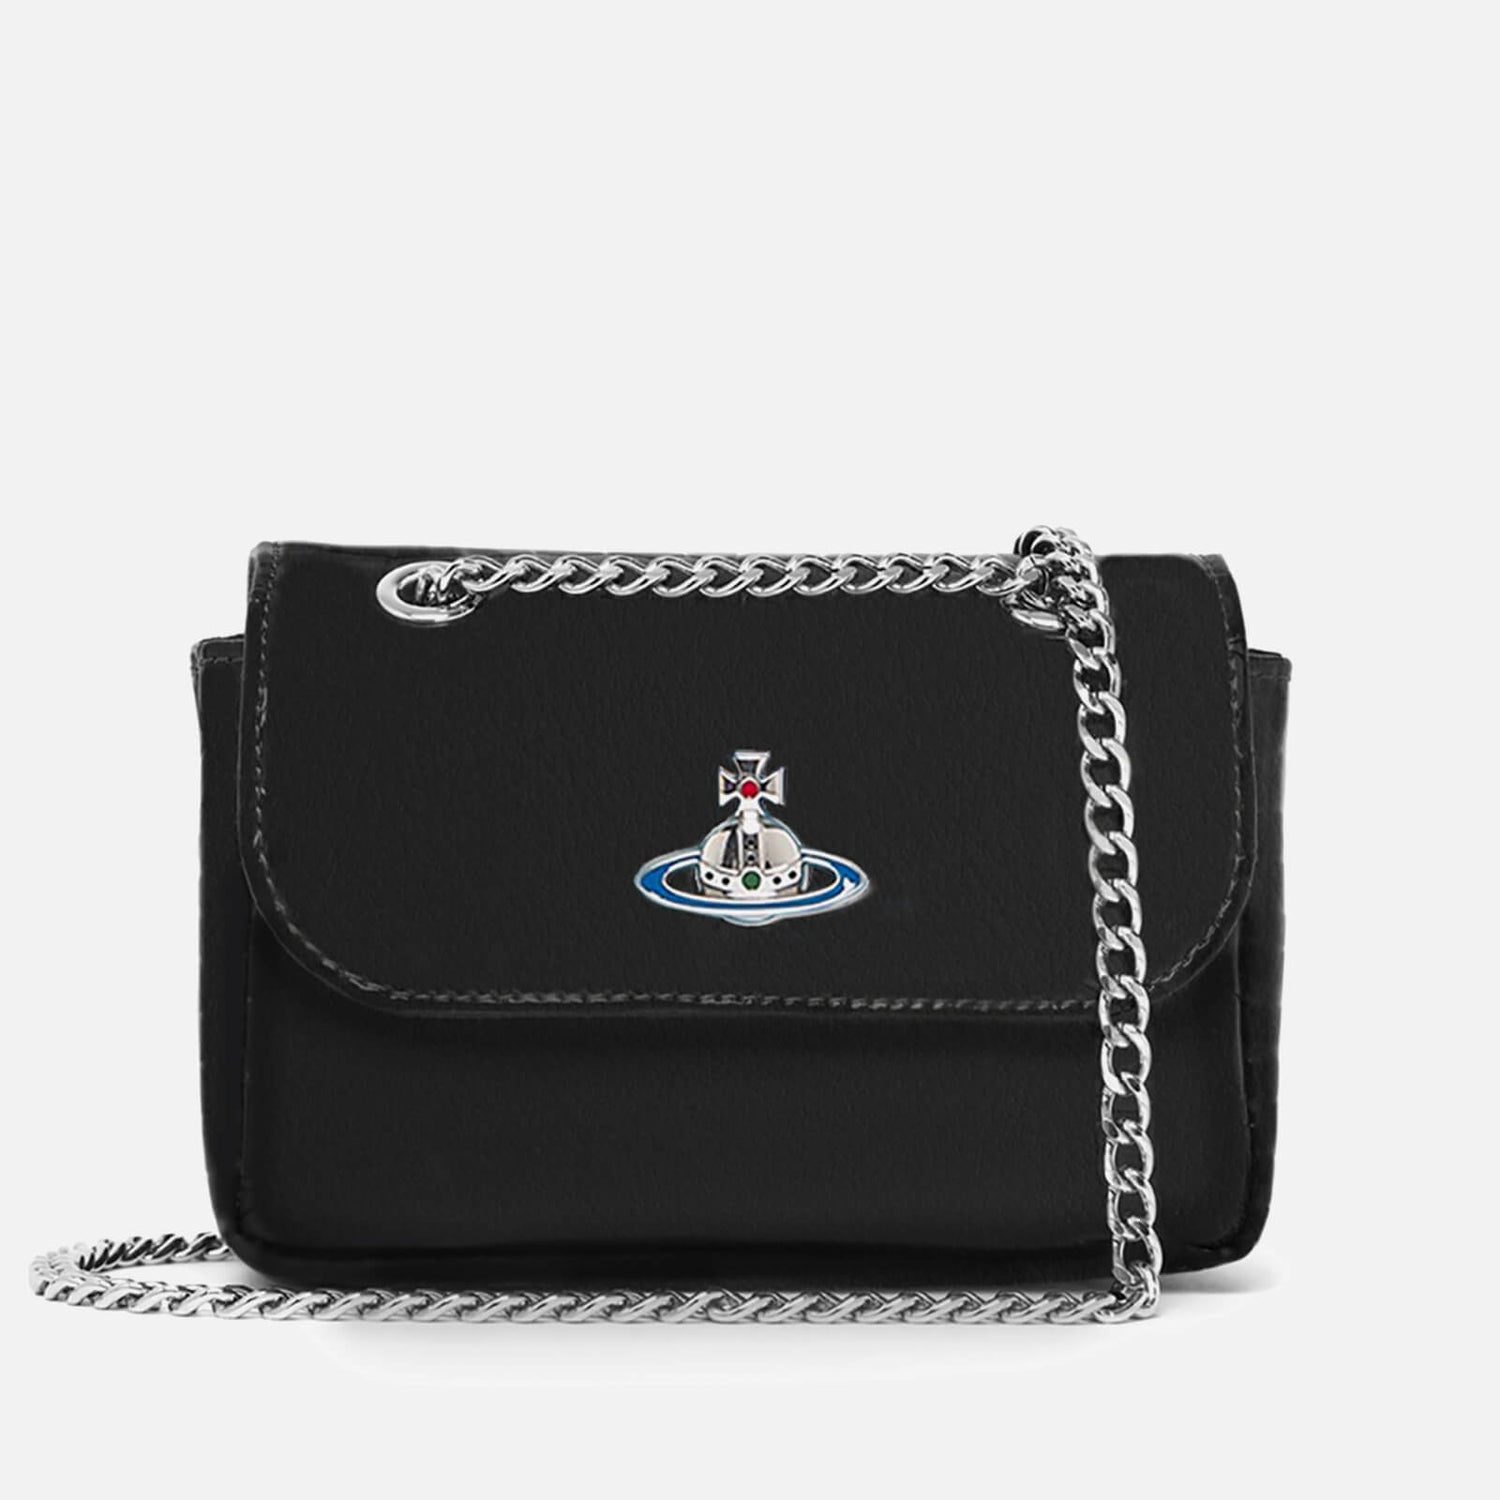 Vivienne Westwood Small Nappa Leather Shoulder Bag